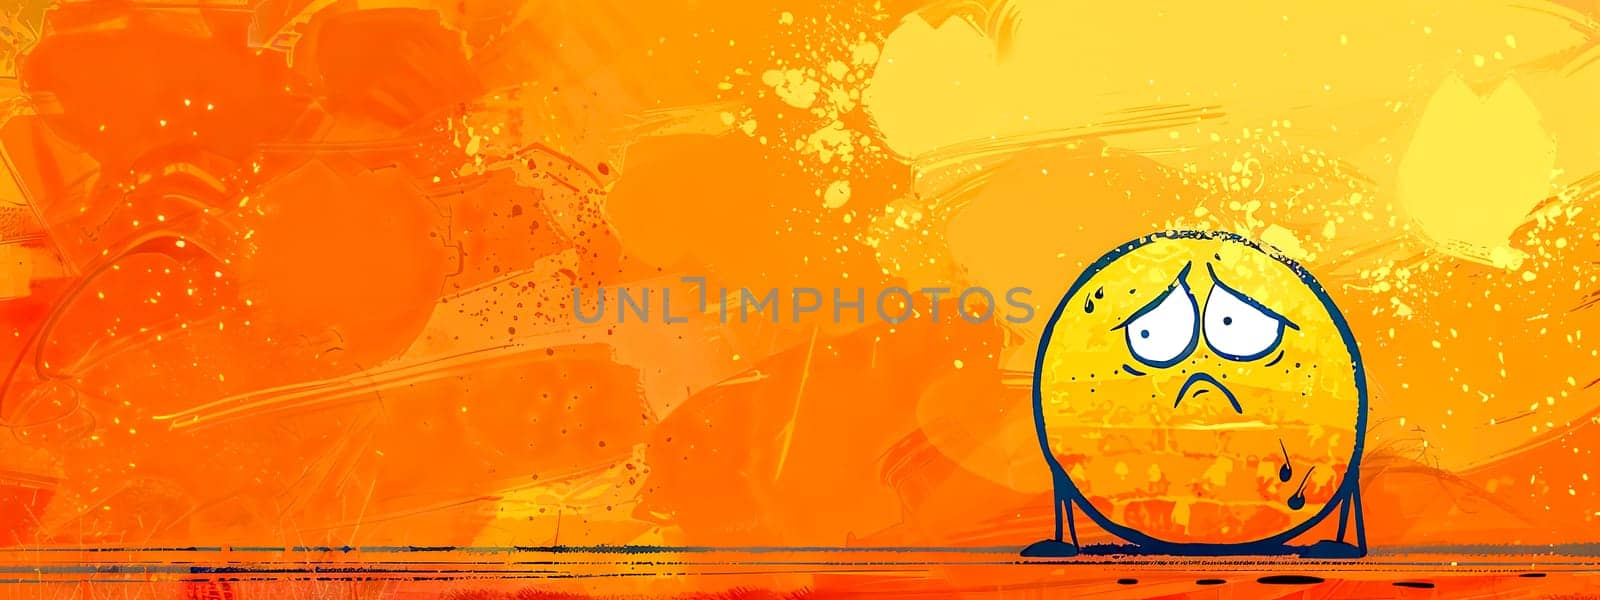 Sad Cartoon Character on Abstract Orange Background by Edophoto